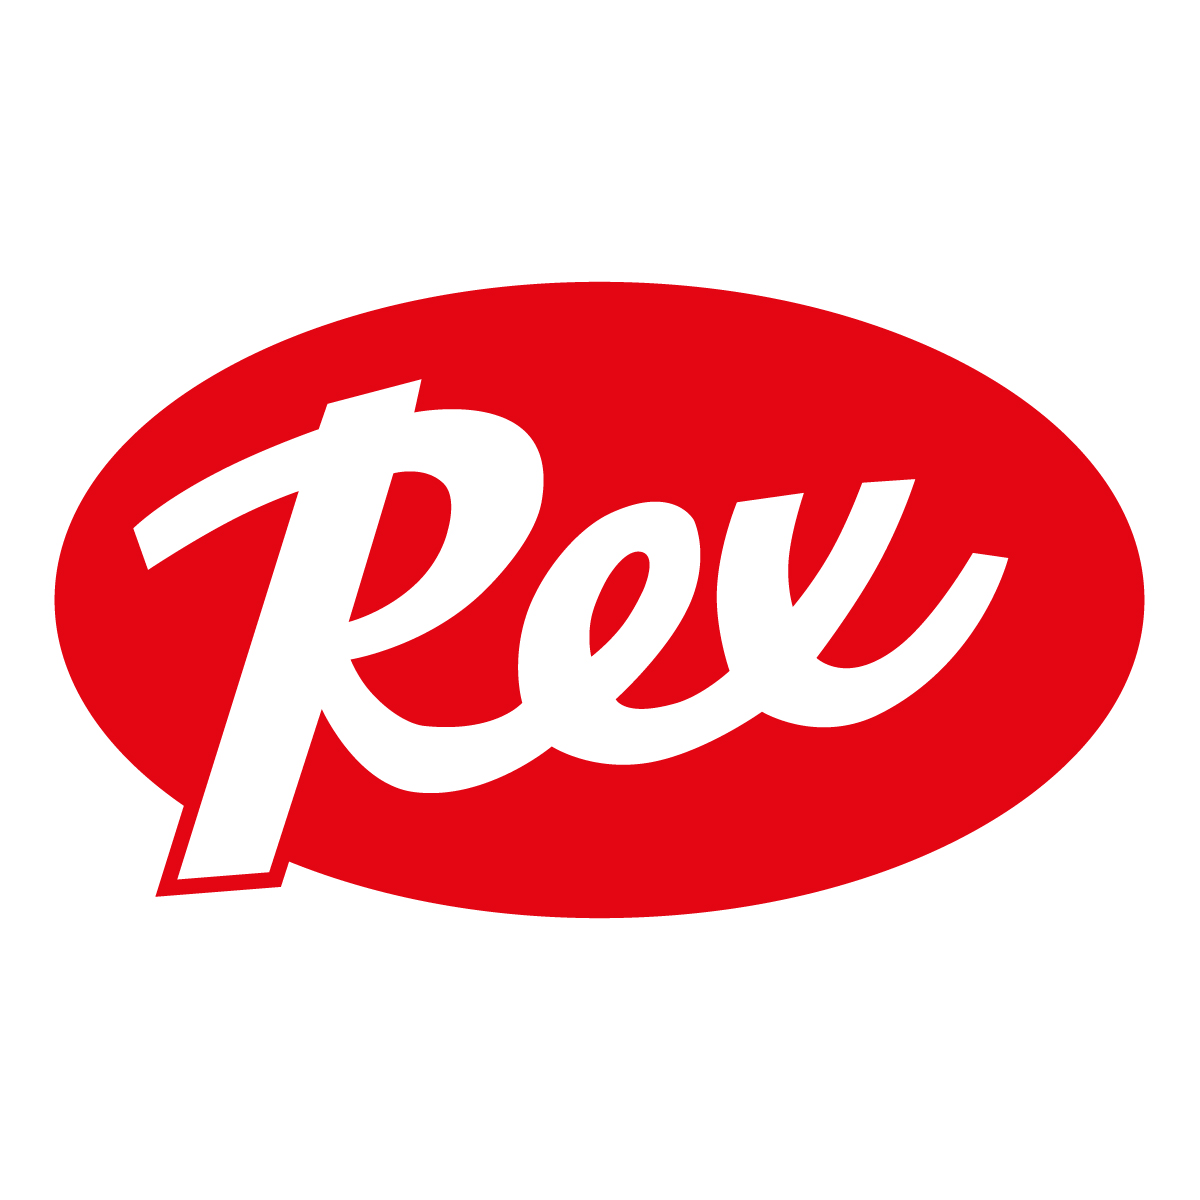 Rex_logo